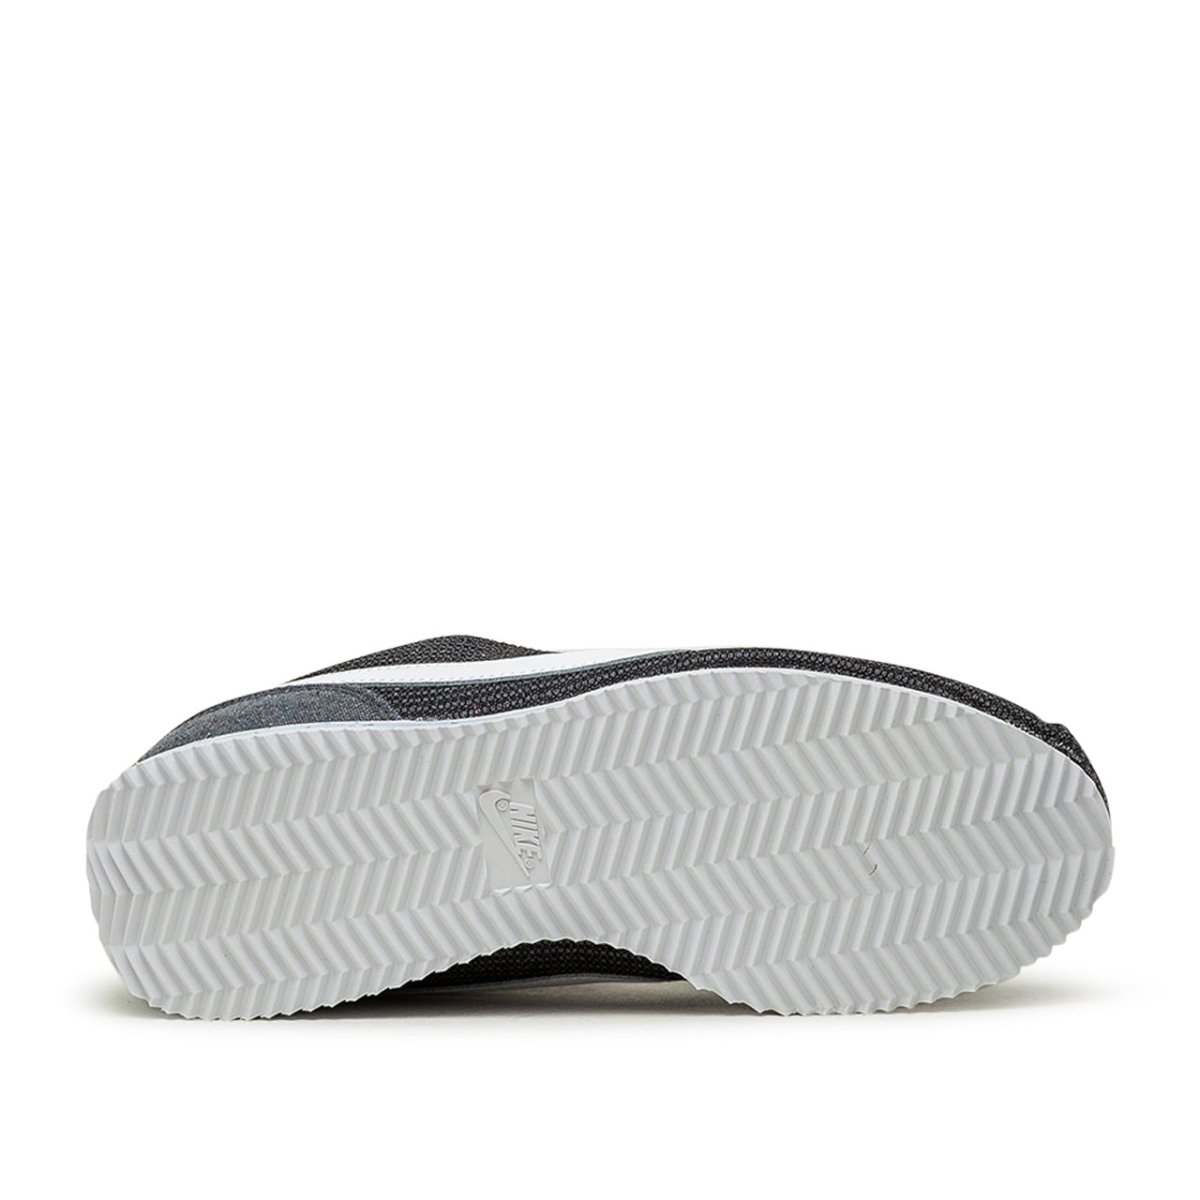 Nike Cortez Basic (Grau / Weiß / Blau)  - Allike Store